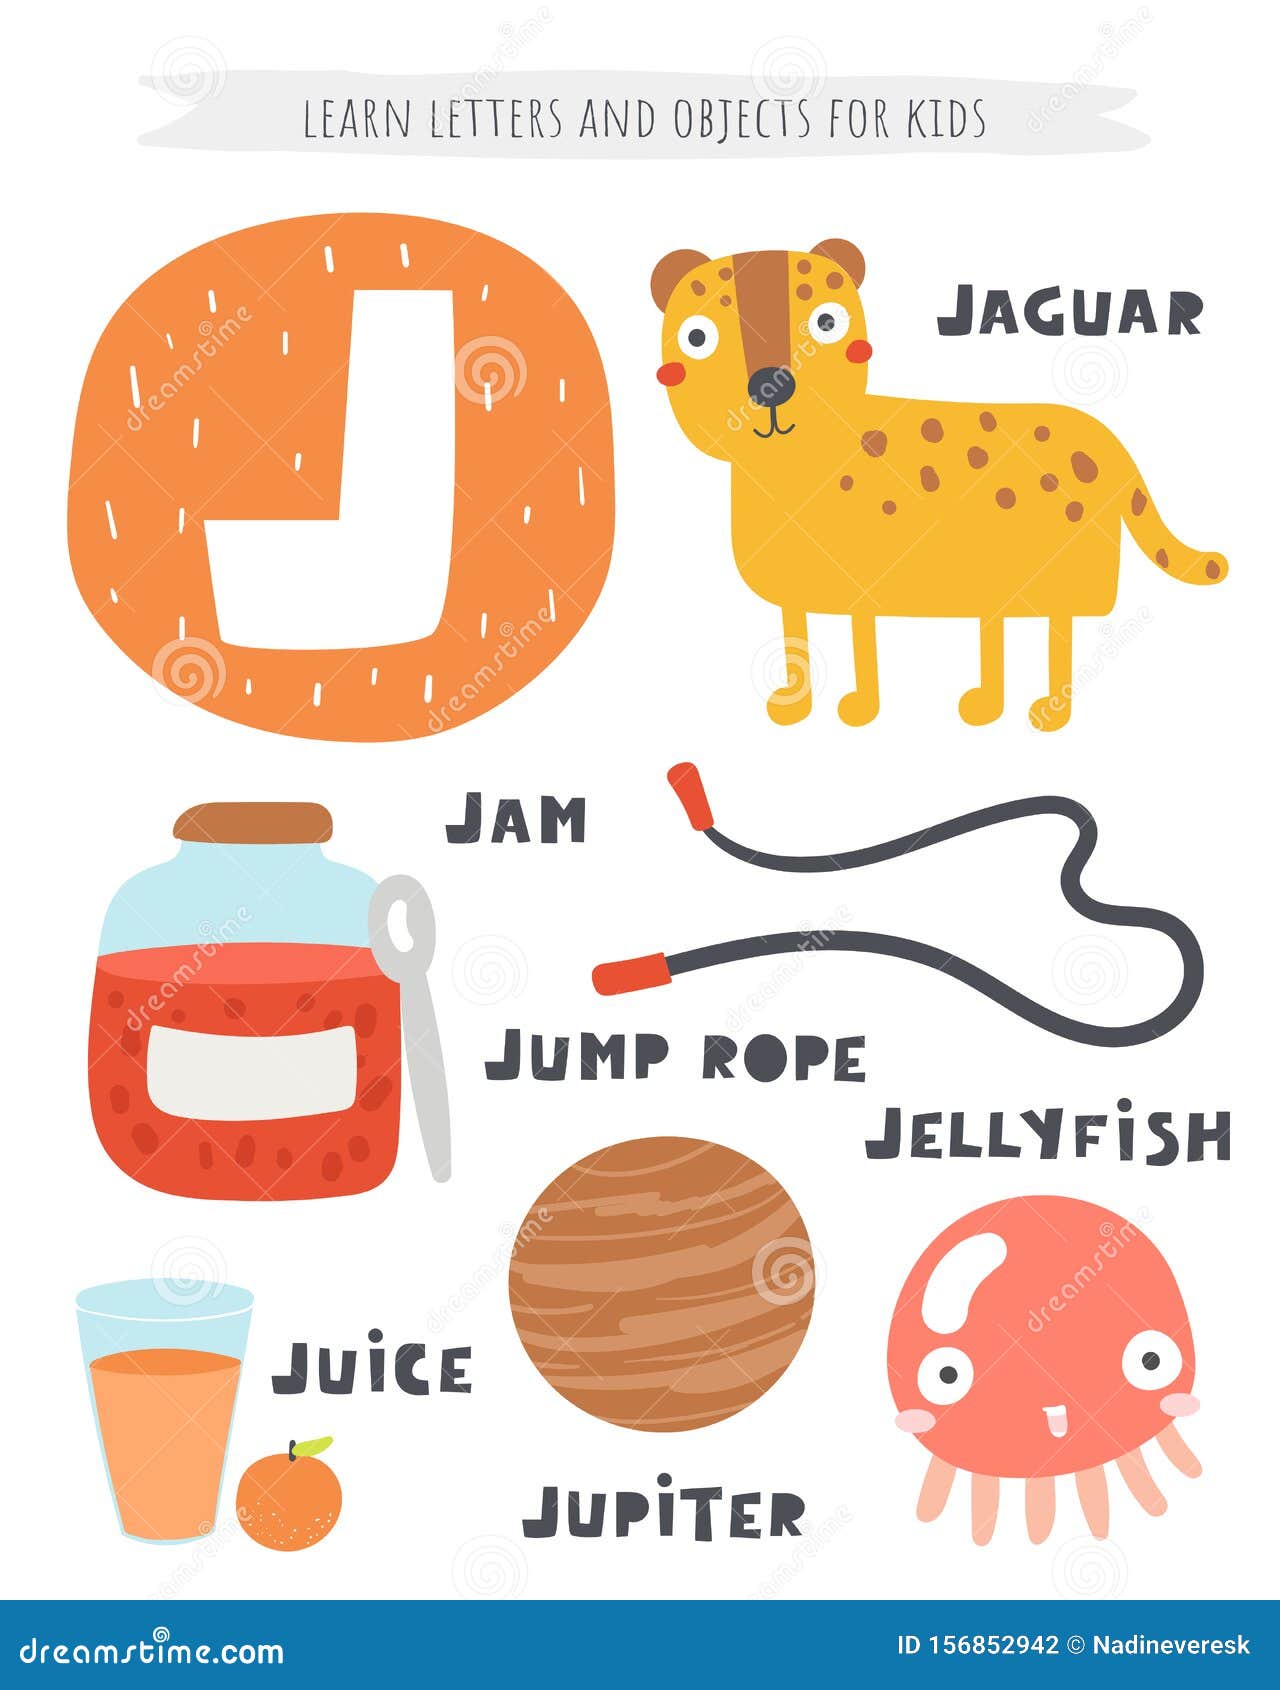 J Letter Objects and Animals Including Jaguar, Jam, Jump Rope, Juice,  Jupiter Planet, Jellyfish. Stock Vector - Illustration of girl, children:  156852942